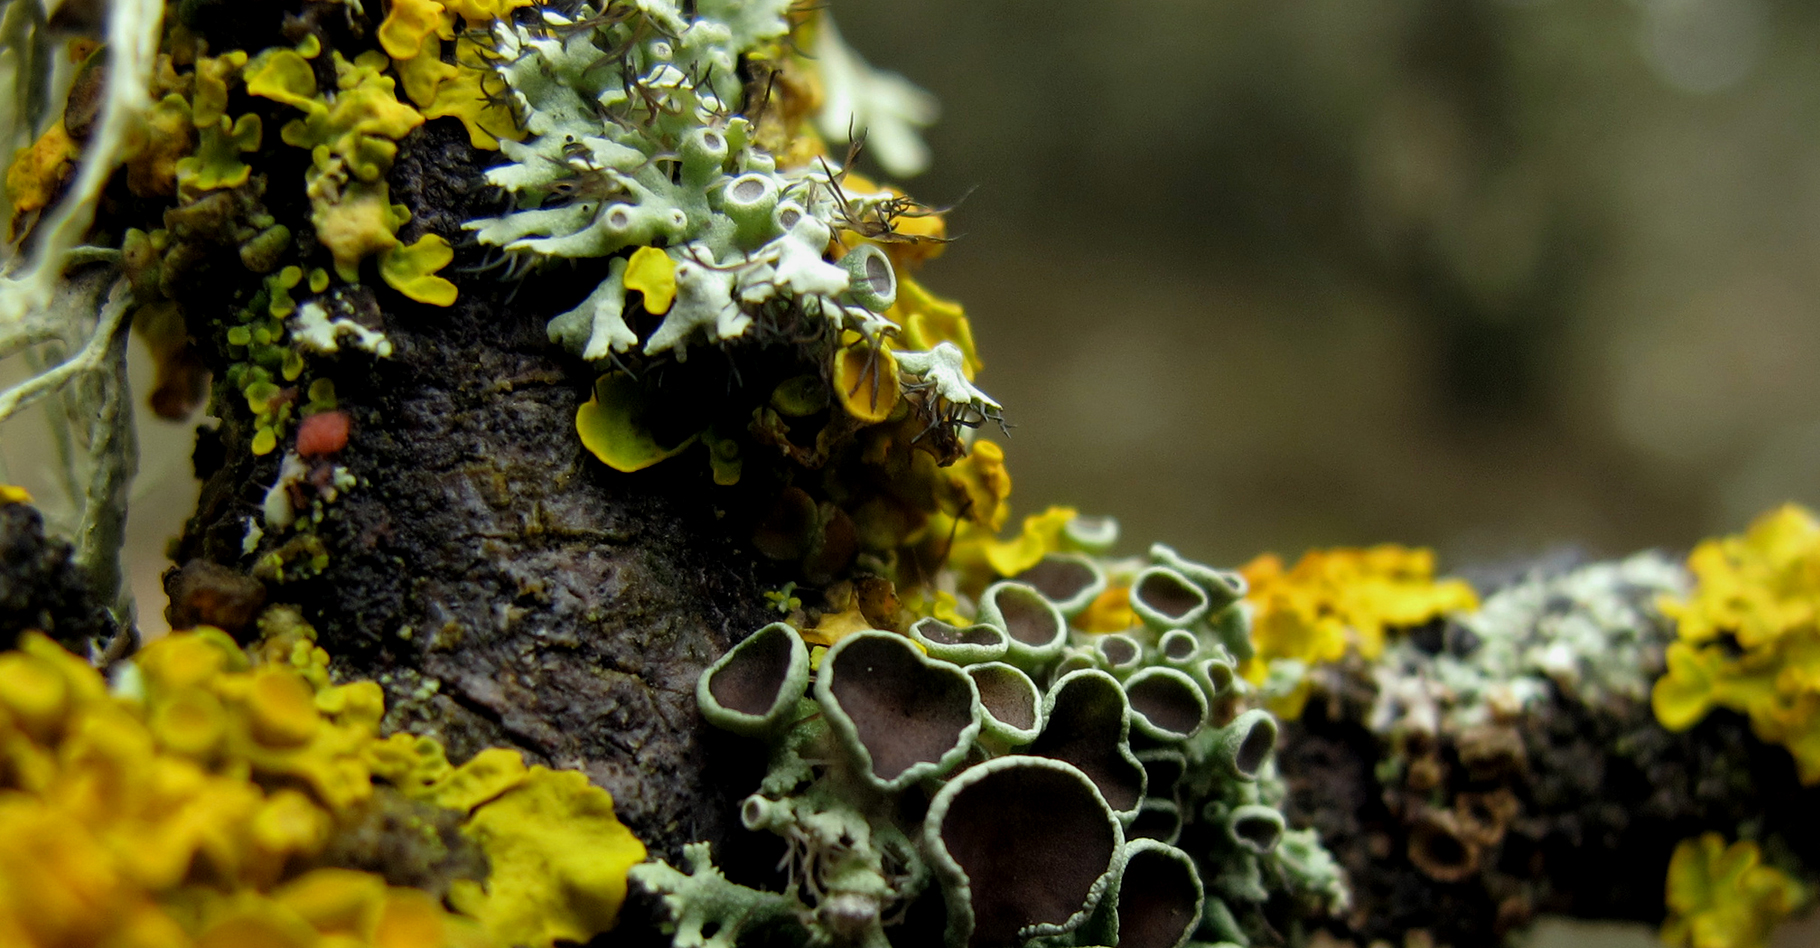 Différentes sortes de lichens. © Jacinta Iluch Valera, CC by-nc 2.0